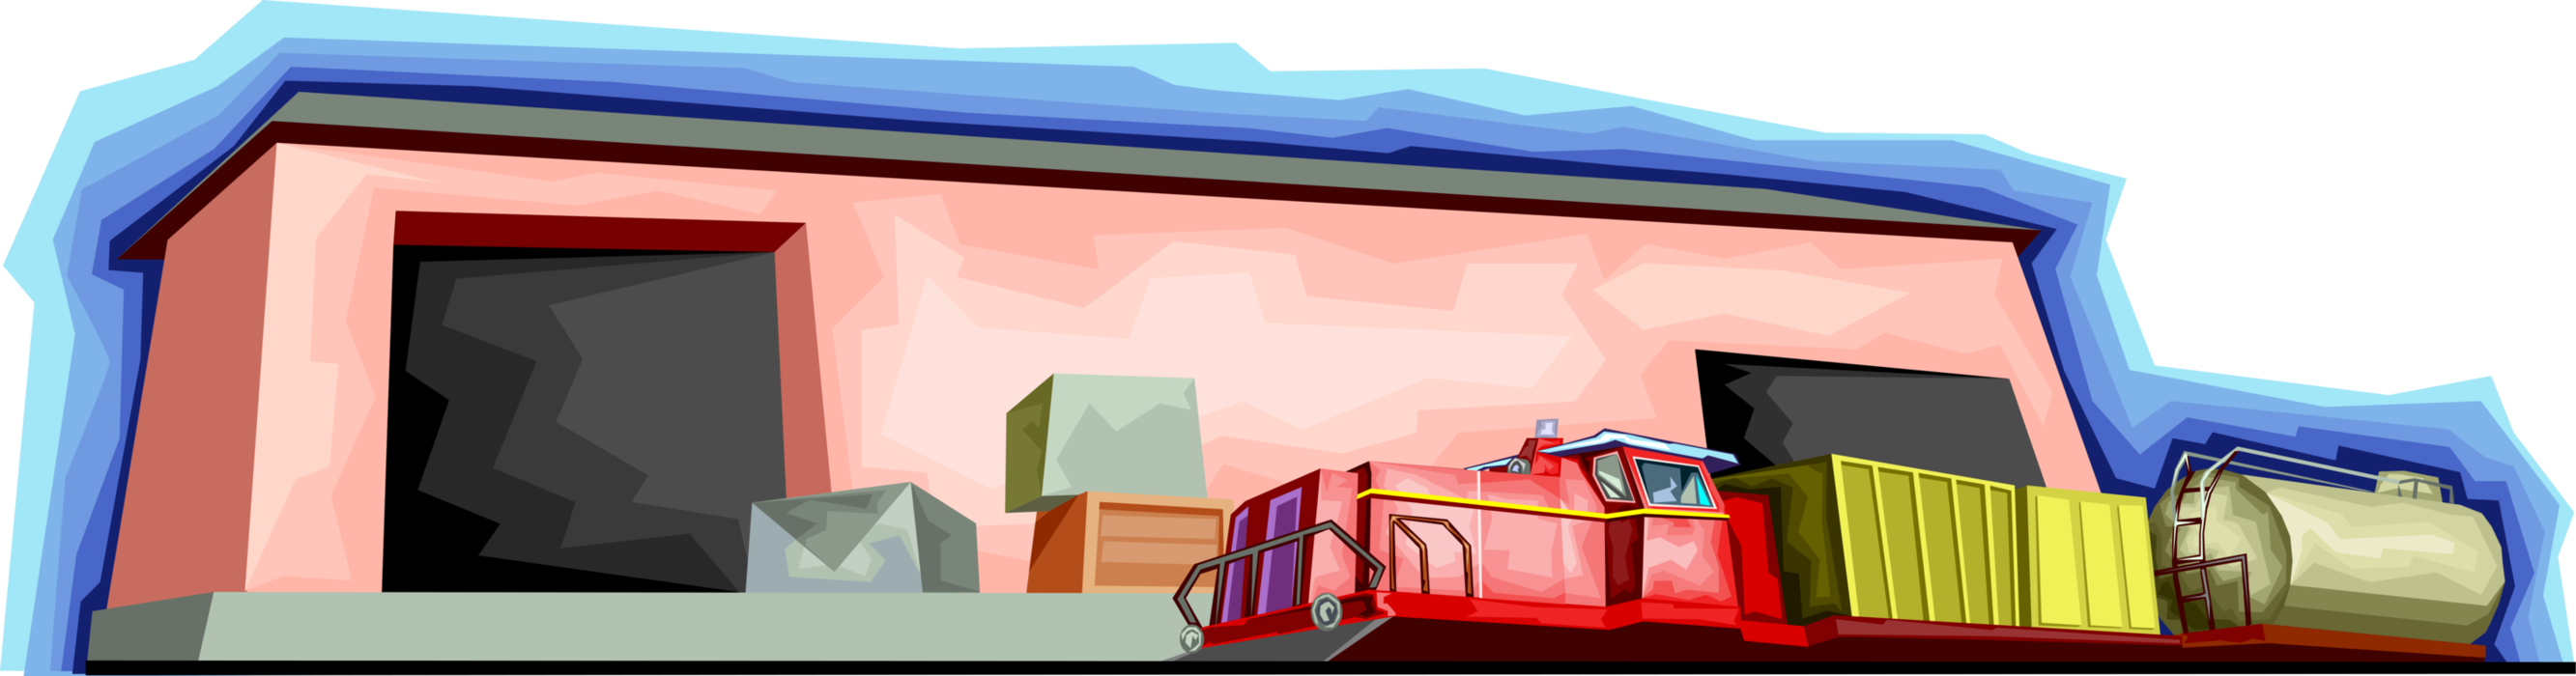 Vector Illustration of Rail Transport Freight Locomotive Railway Train at Station